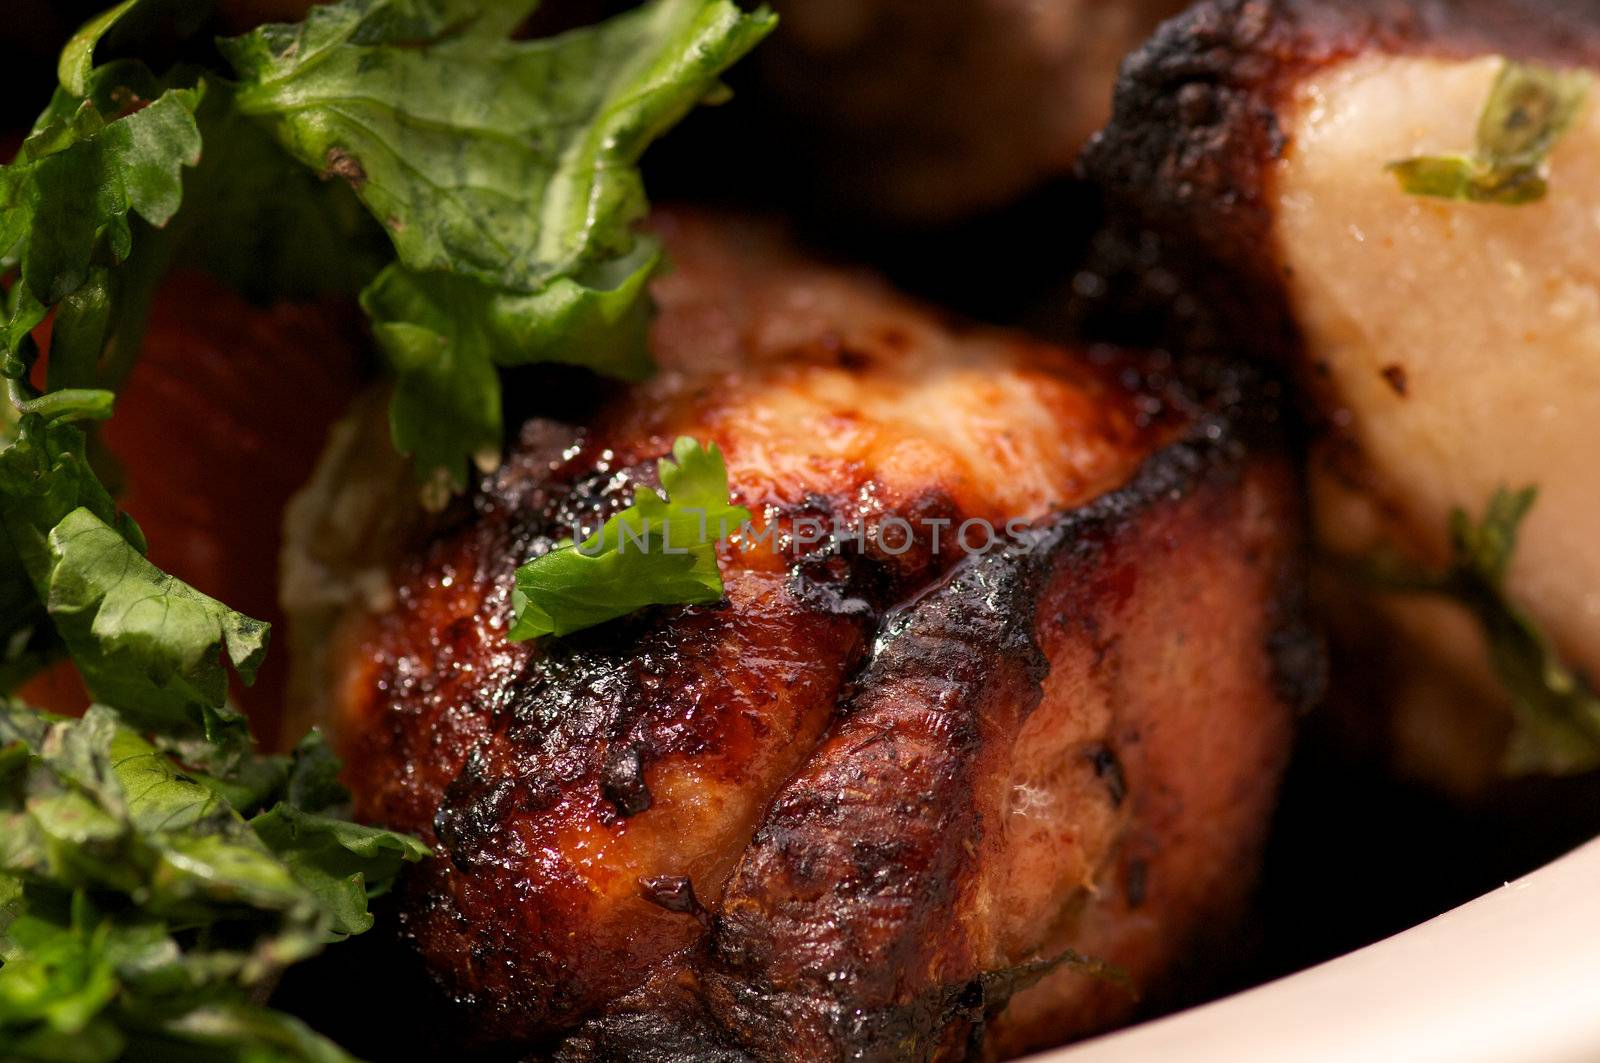 Portion of Perfect Ripe Pork Kebab closeup with Greens